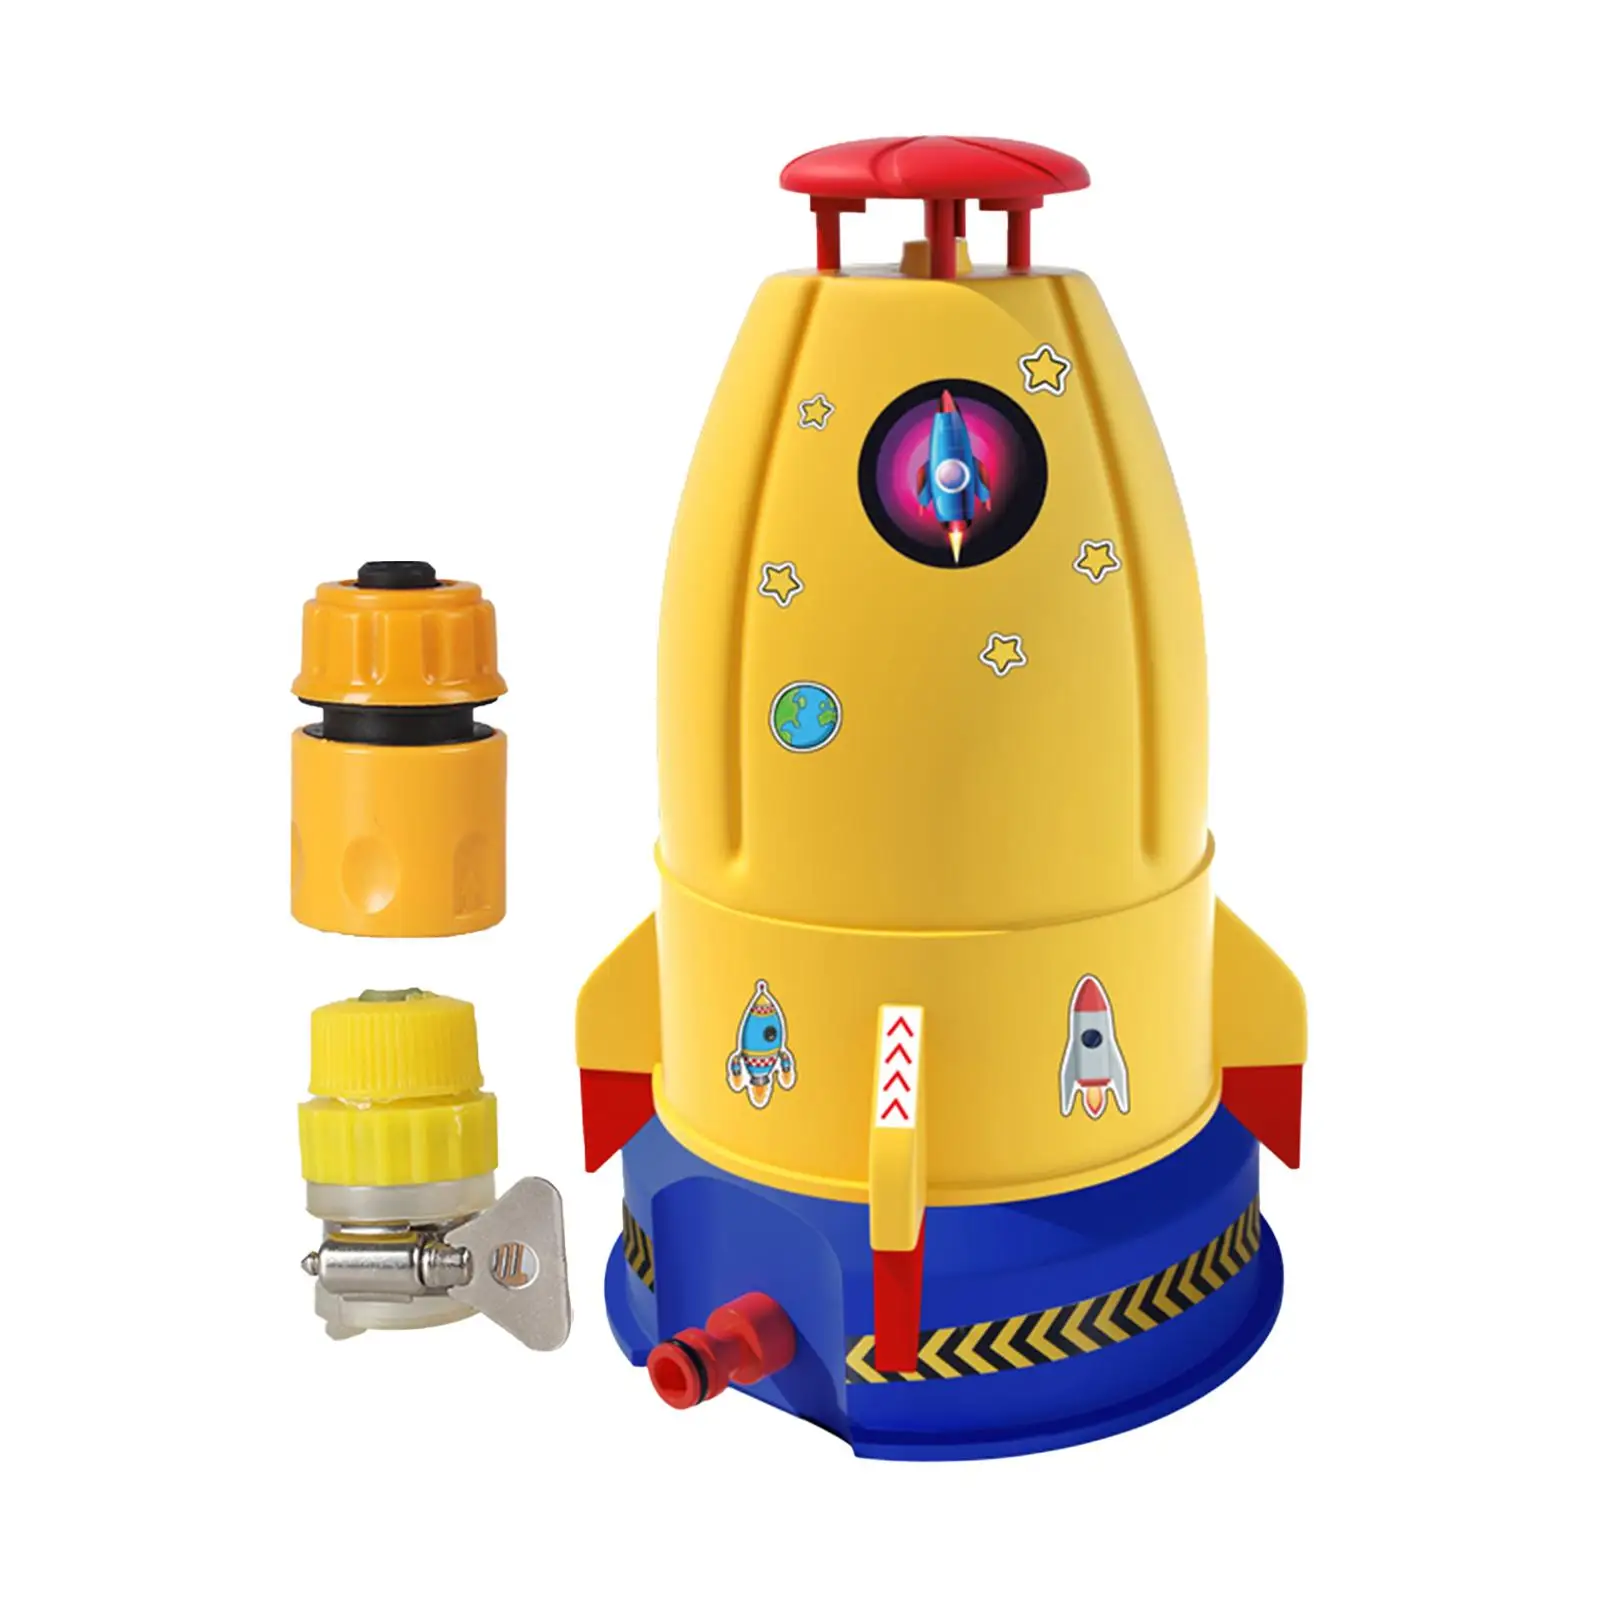 Rocket Sprinkler Toys Rocket Sprinkler for Beach Pool Toy Yard